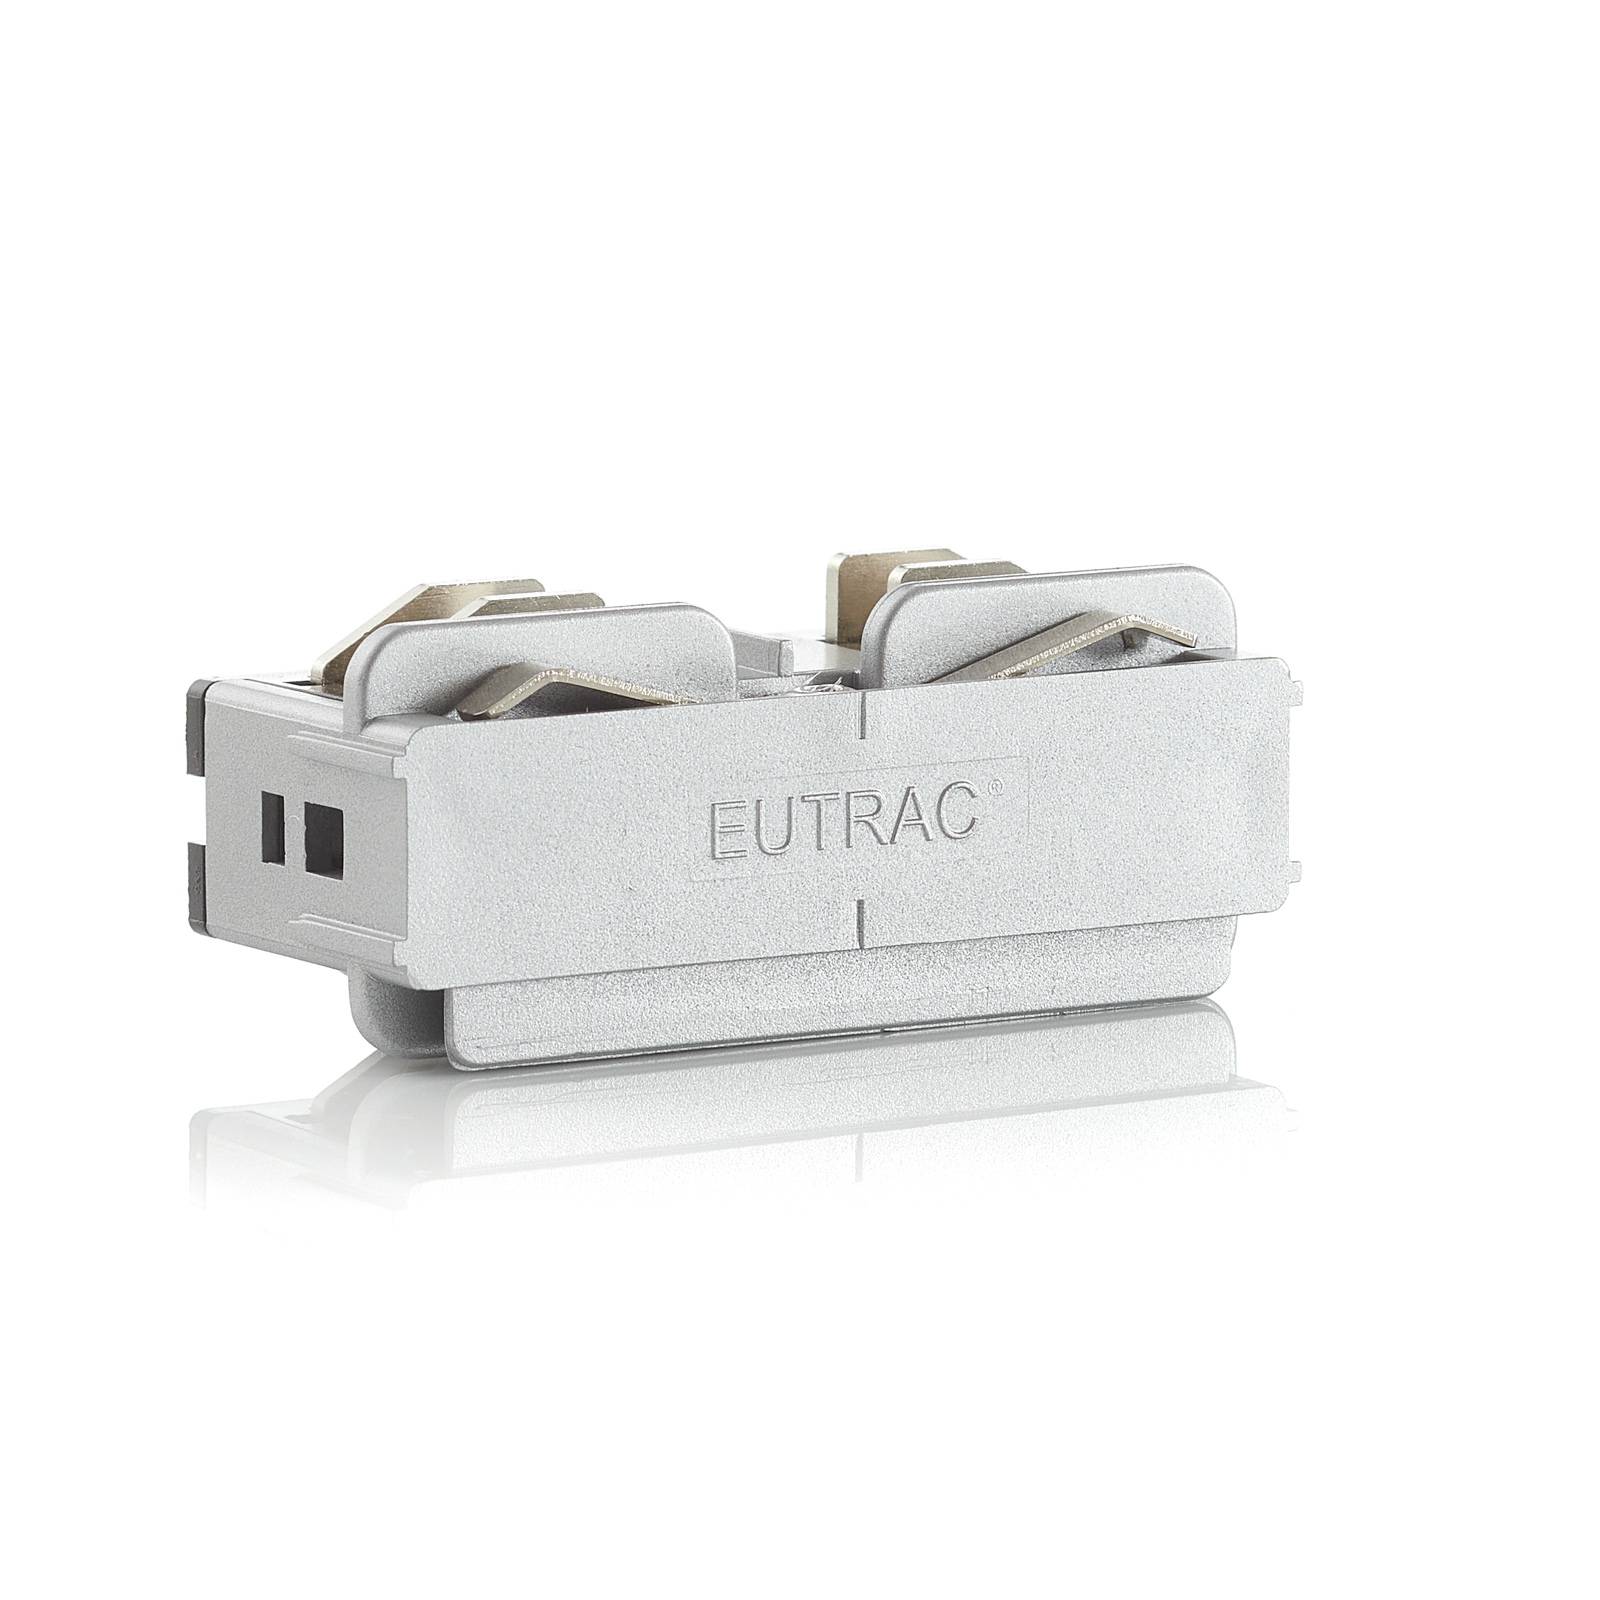 Eutrac 3-fas elektrisk längsgående kontakt silver